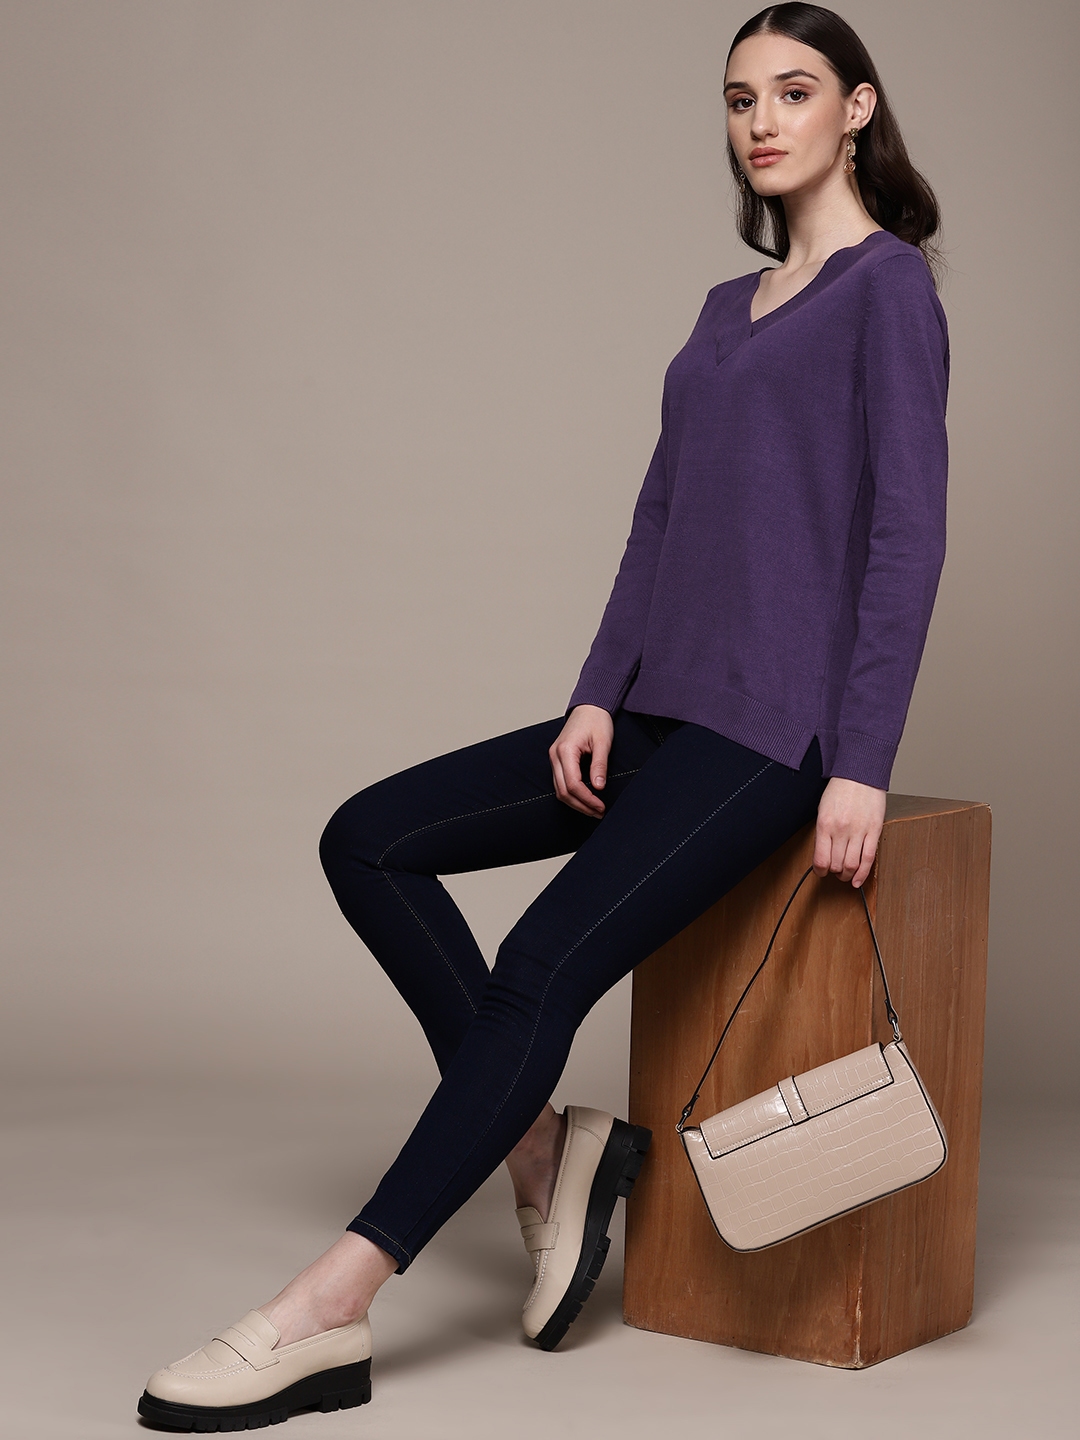 Buy Macy's Karen Scott Women Cotton V Neck Sweater - Sweaters for